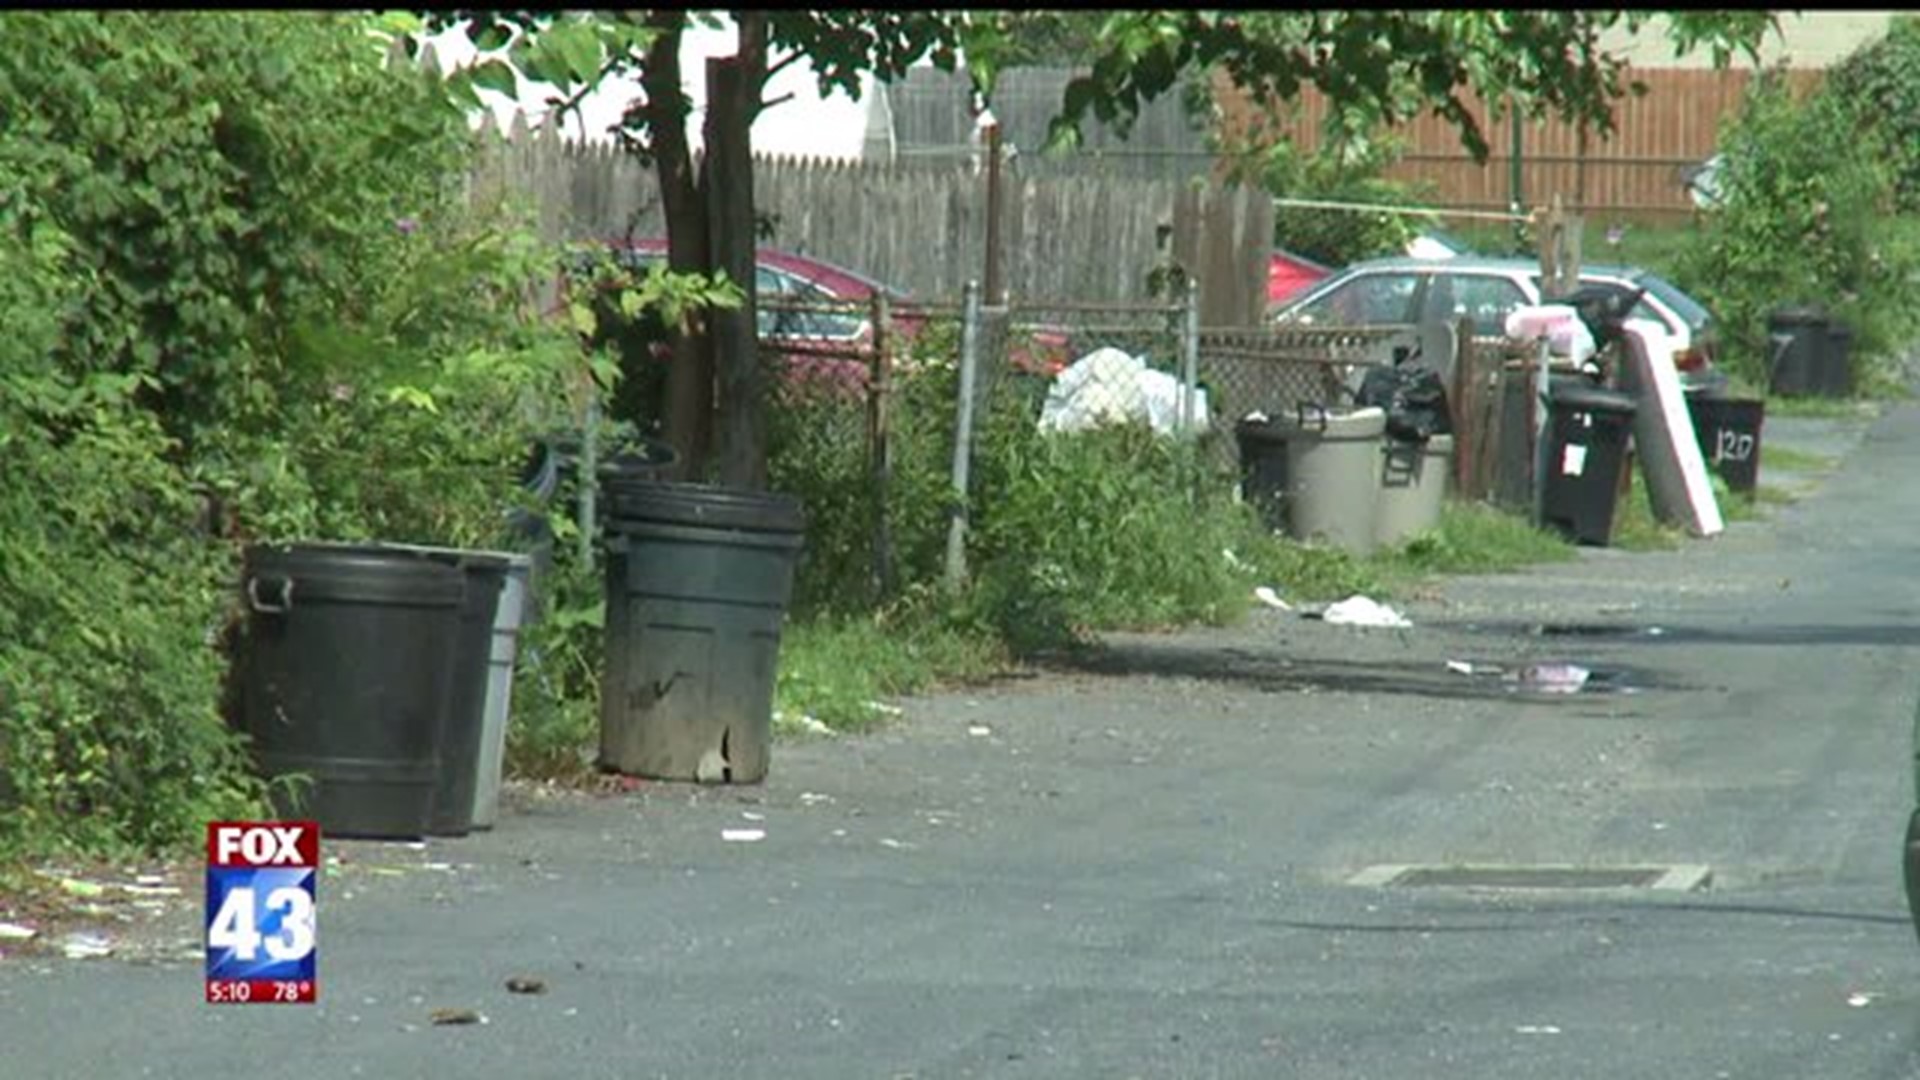 City Controlling Trash Problem in Harrisburg